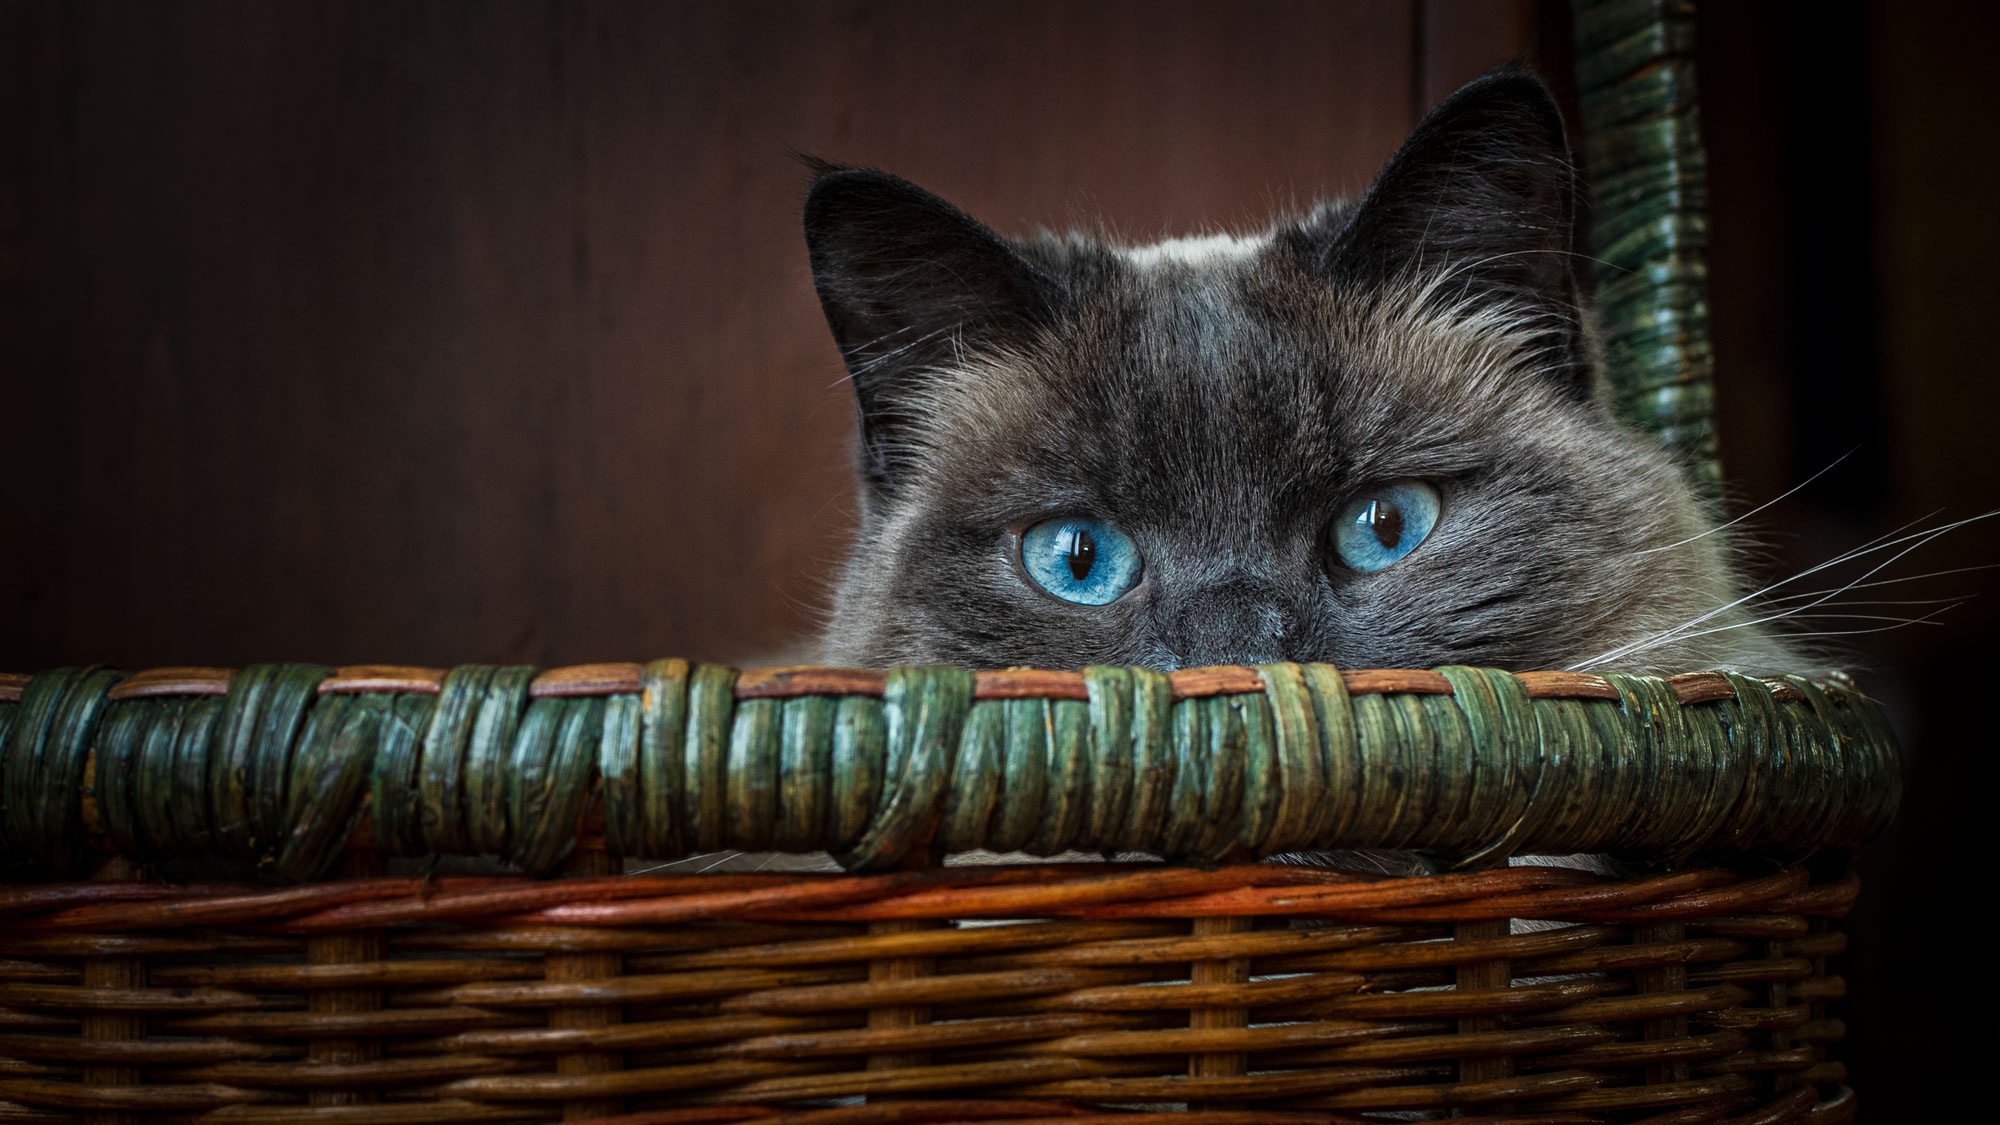 General 2000x1125 cats animals mammals baskets animal eyes looking at viewer blue eyes indoors